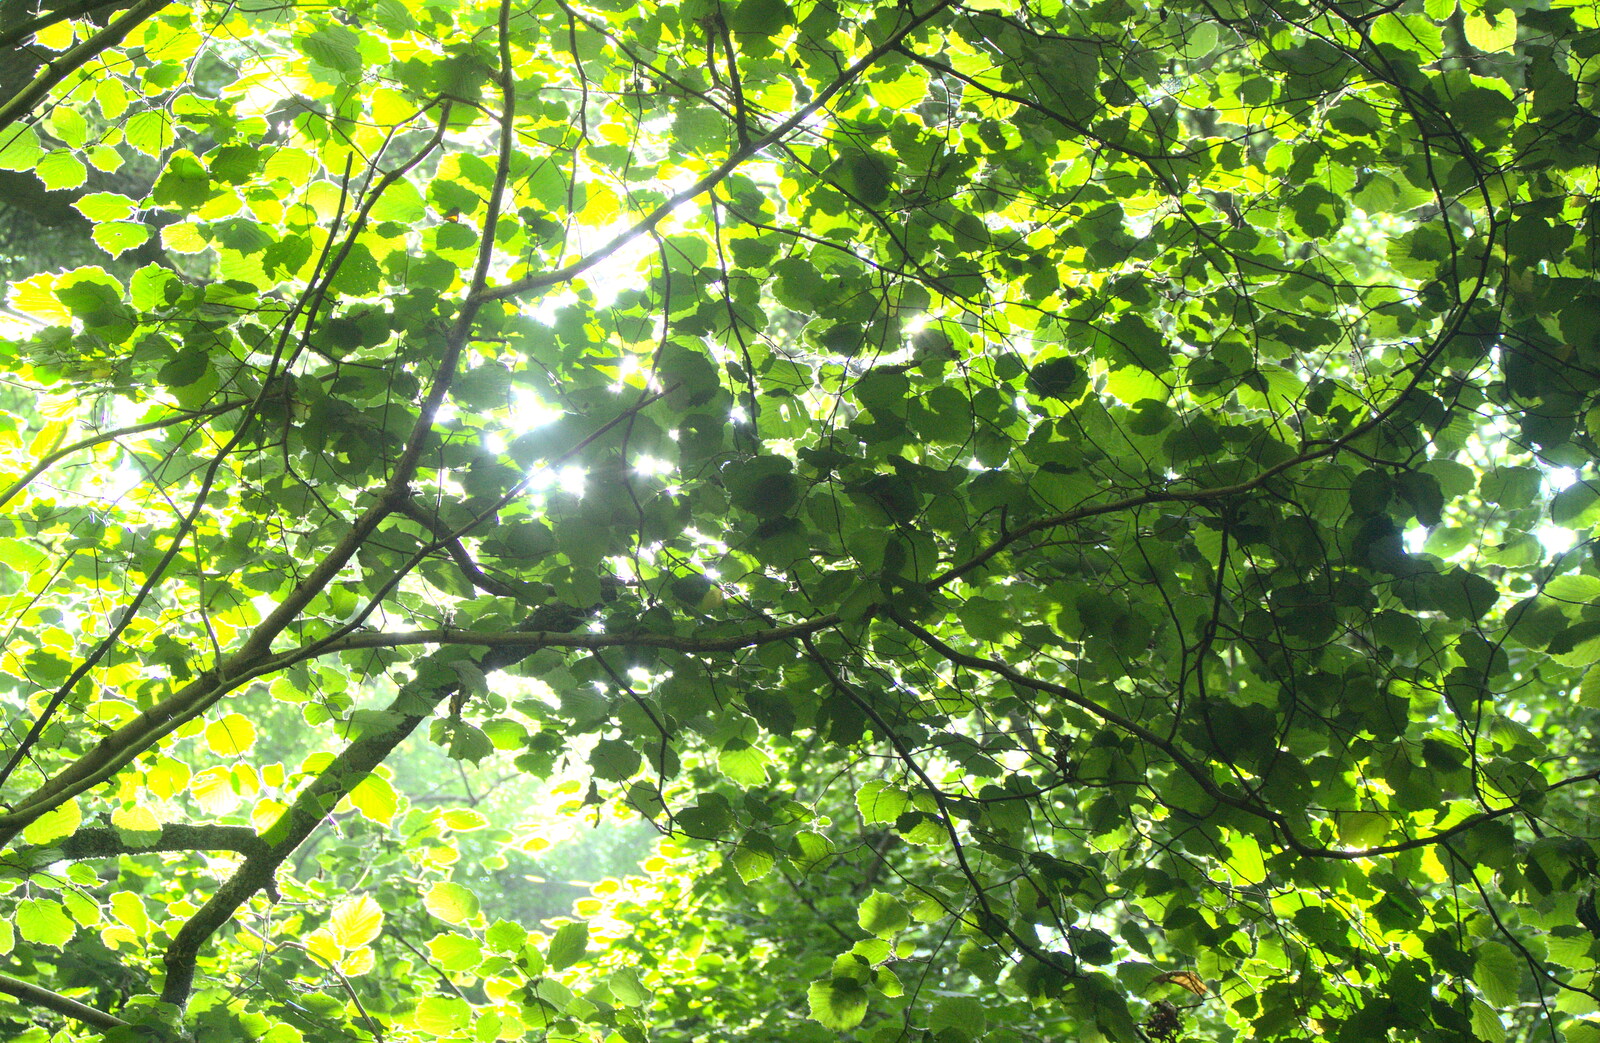 The morning sun shines through the verdant leaves from Henry's 60th Birthday, Hethel, Norfolk - 3rd August 2013